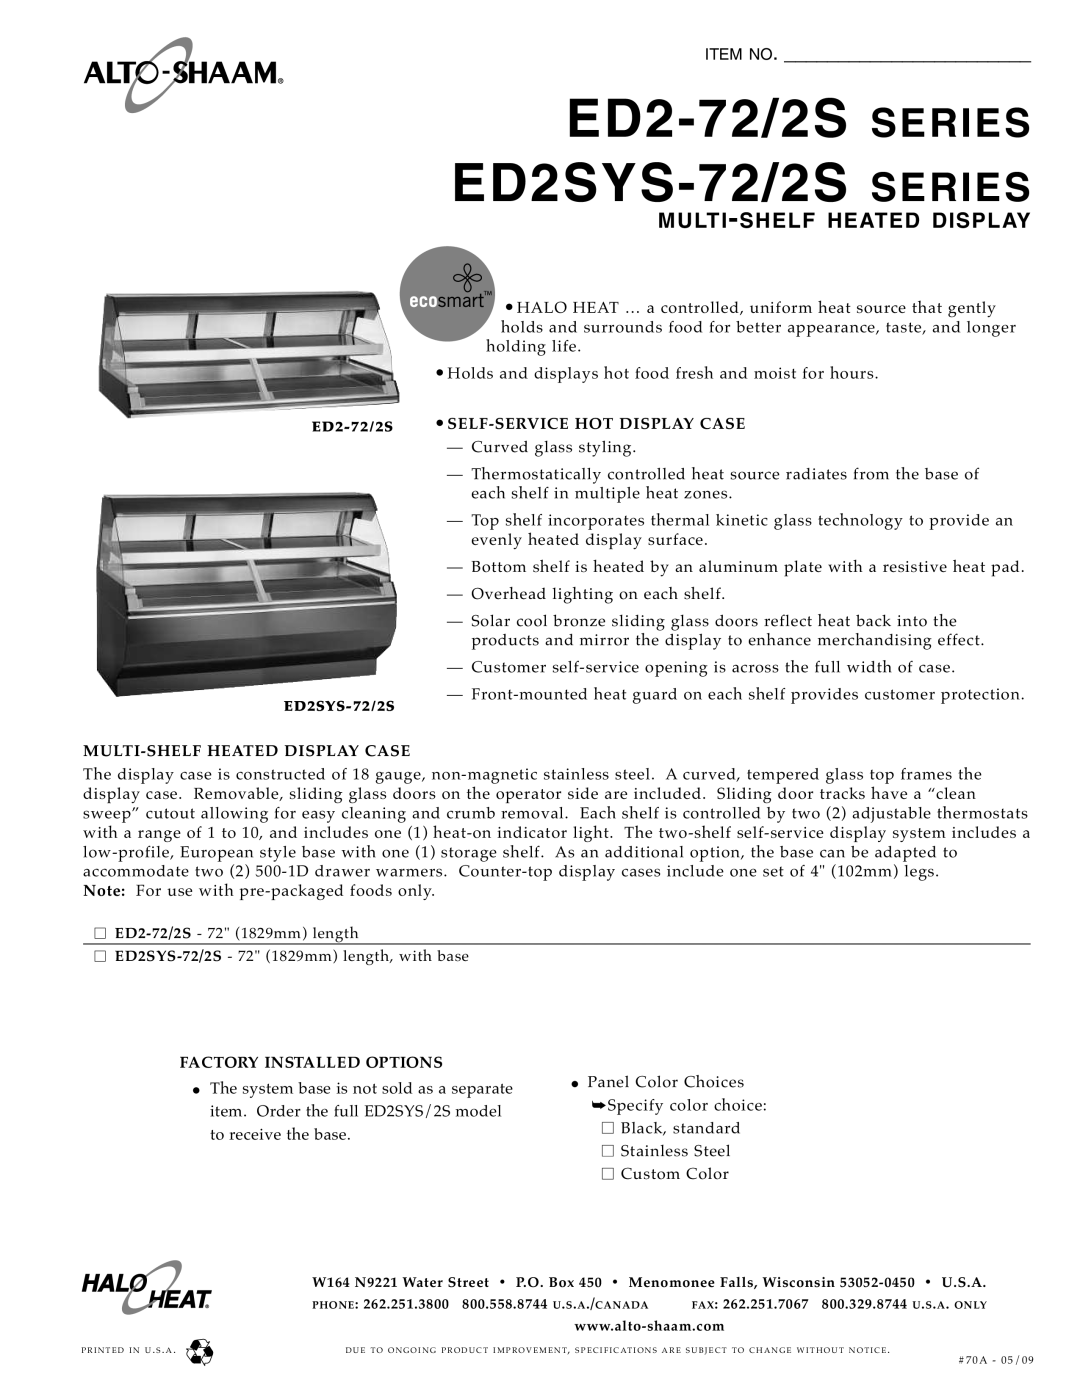 Alto-Shaam ED2SYS-72, ED2-72 specifications Self-Se Rvice Hot Display Ca Se, Multi-Sh Elf Heated Dis Play Case, Item No 